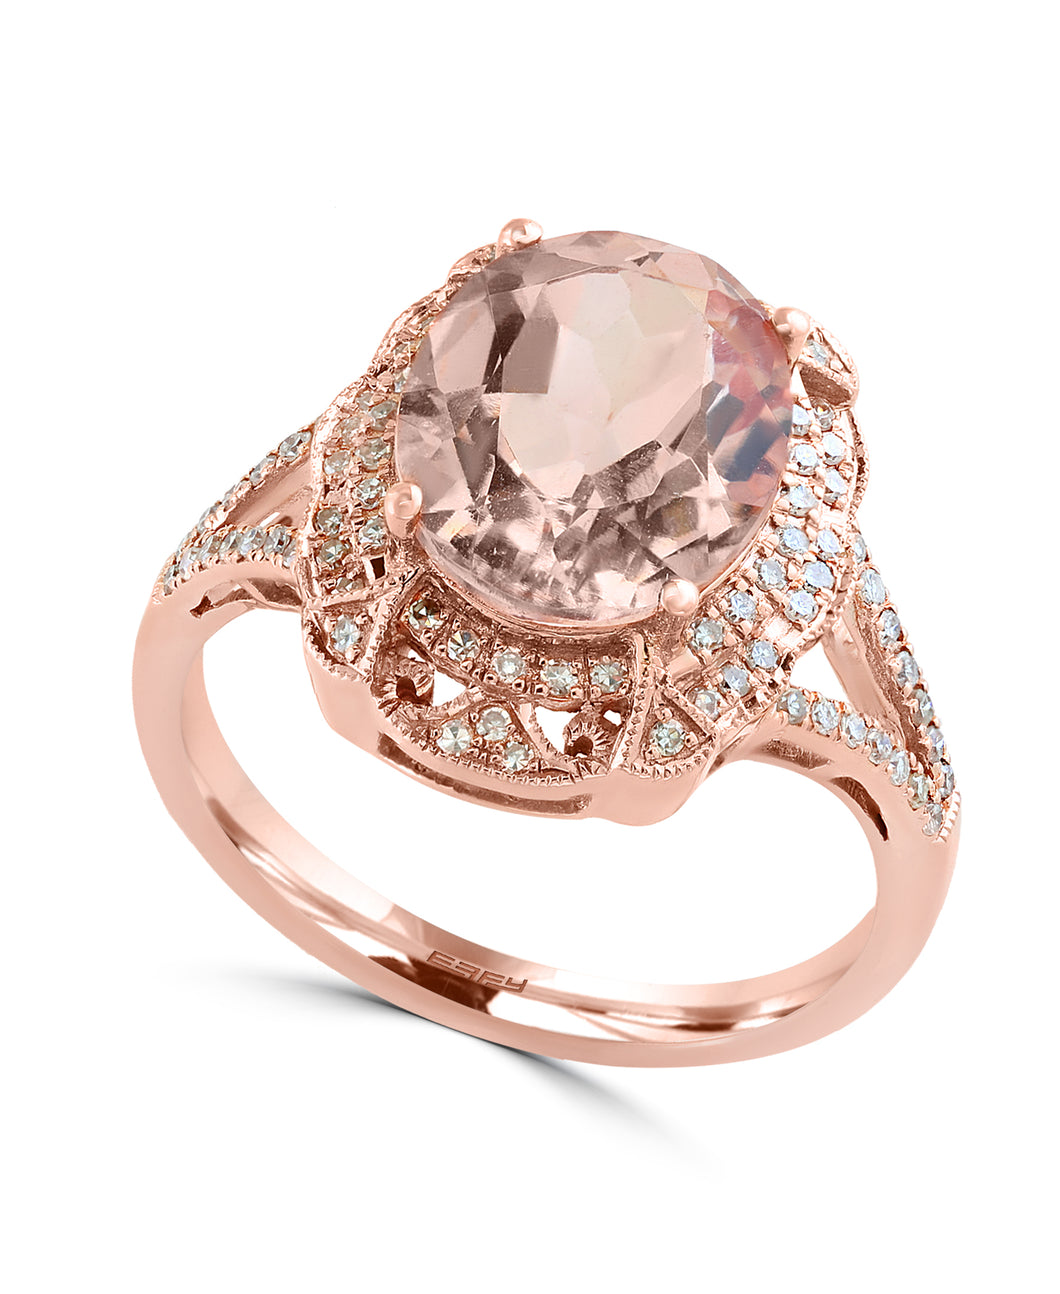 Effy 14K Rose Gold Diamond & Morganite Ring